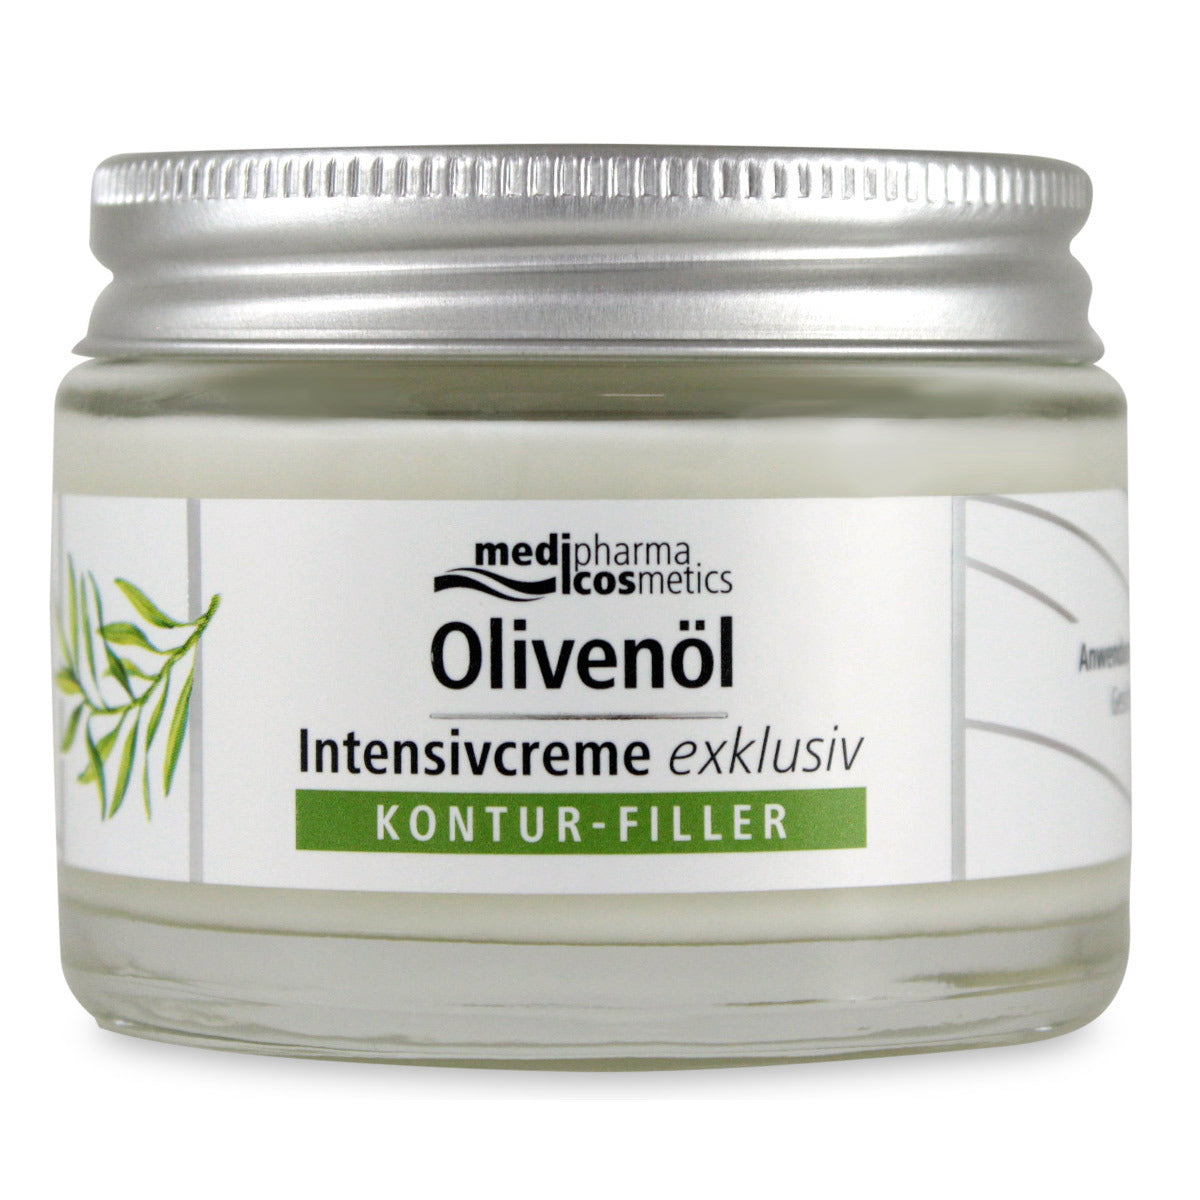 Primary image of Olivenol Intensivcreme Contour Filler